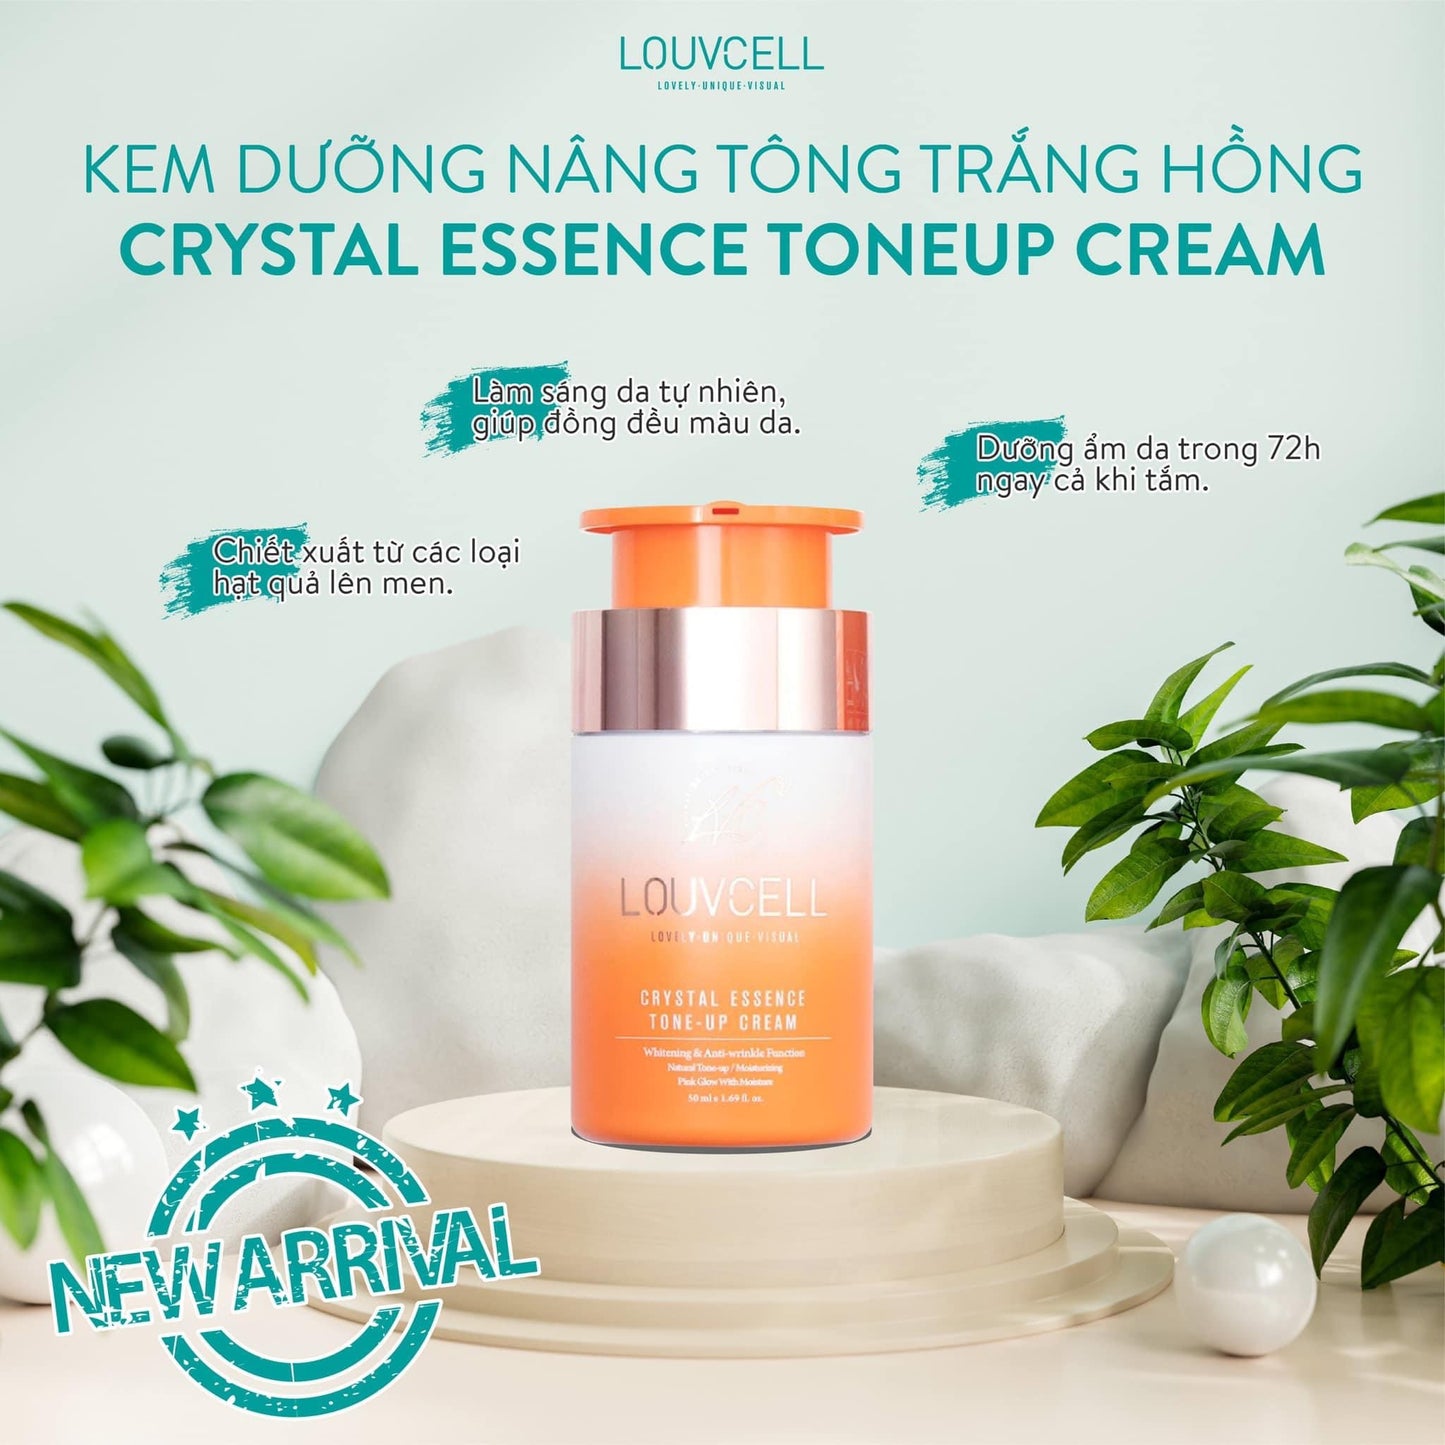 Crystal essence Toneup cream Louvcell